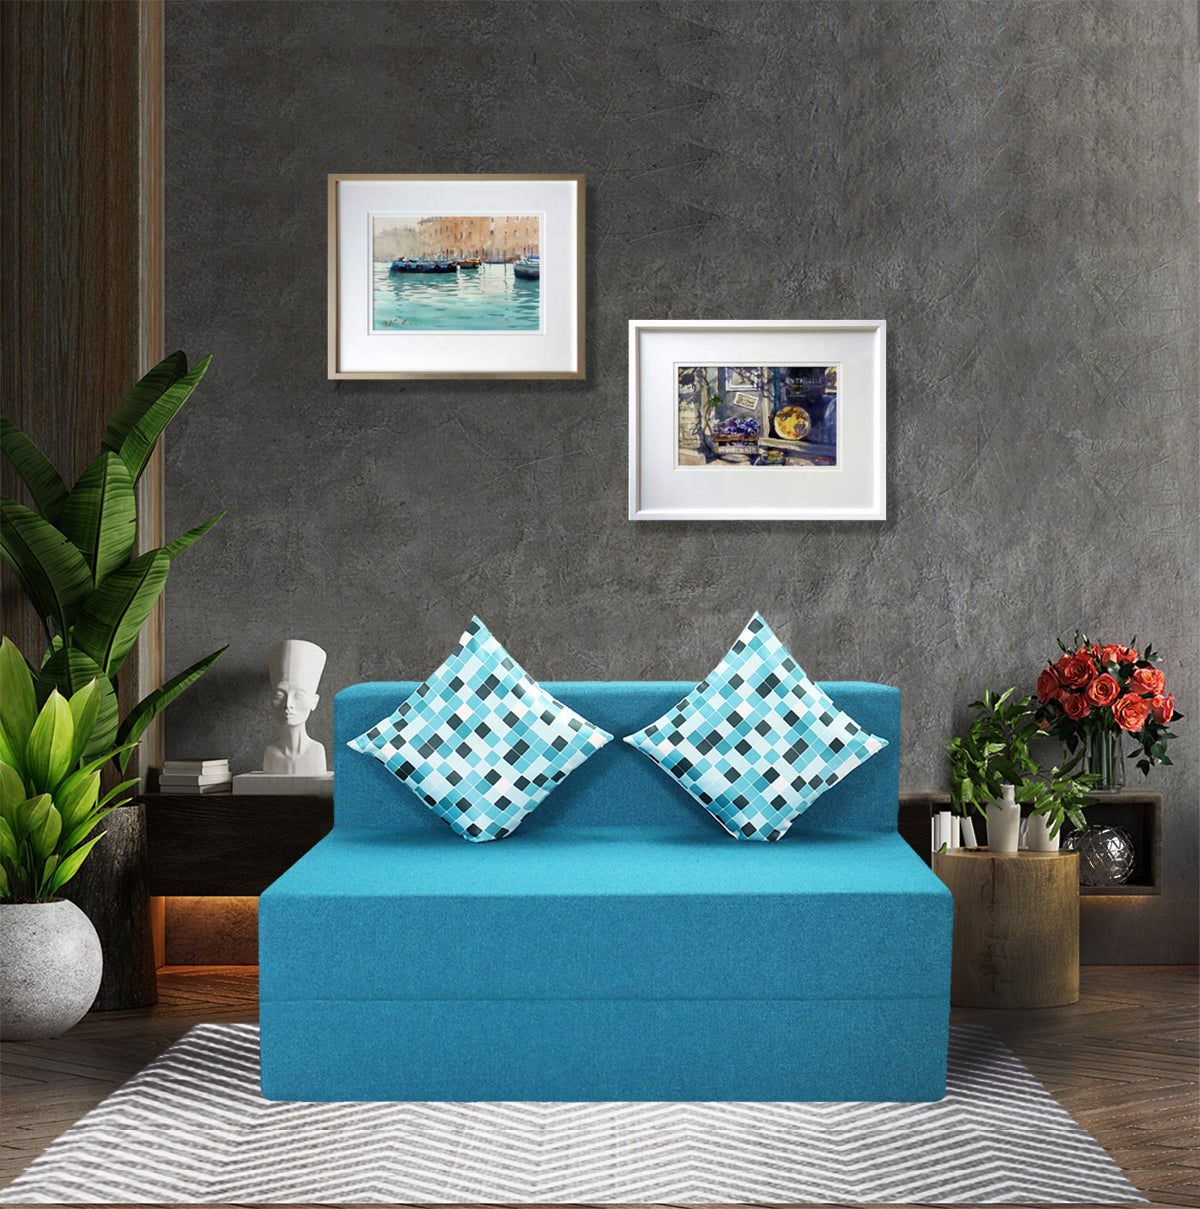 Sky Blue Jute Fabric 6×4 Sofa cum Bed with Printed Cushion